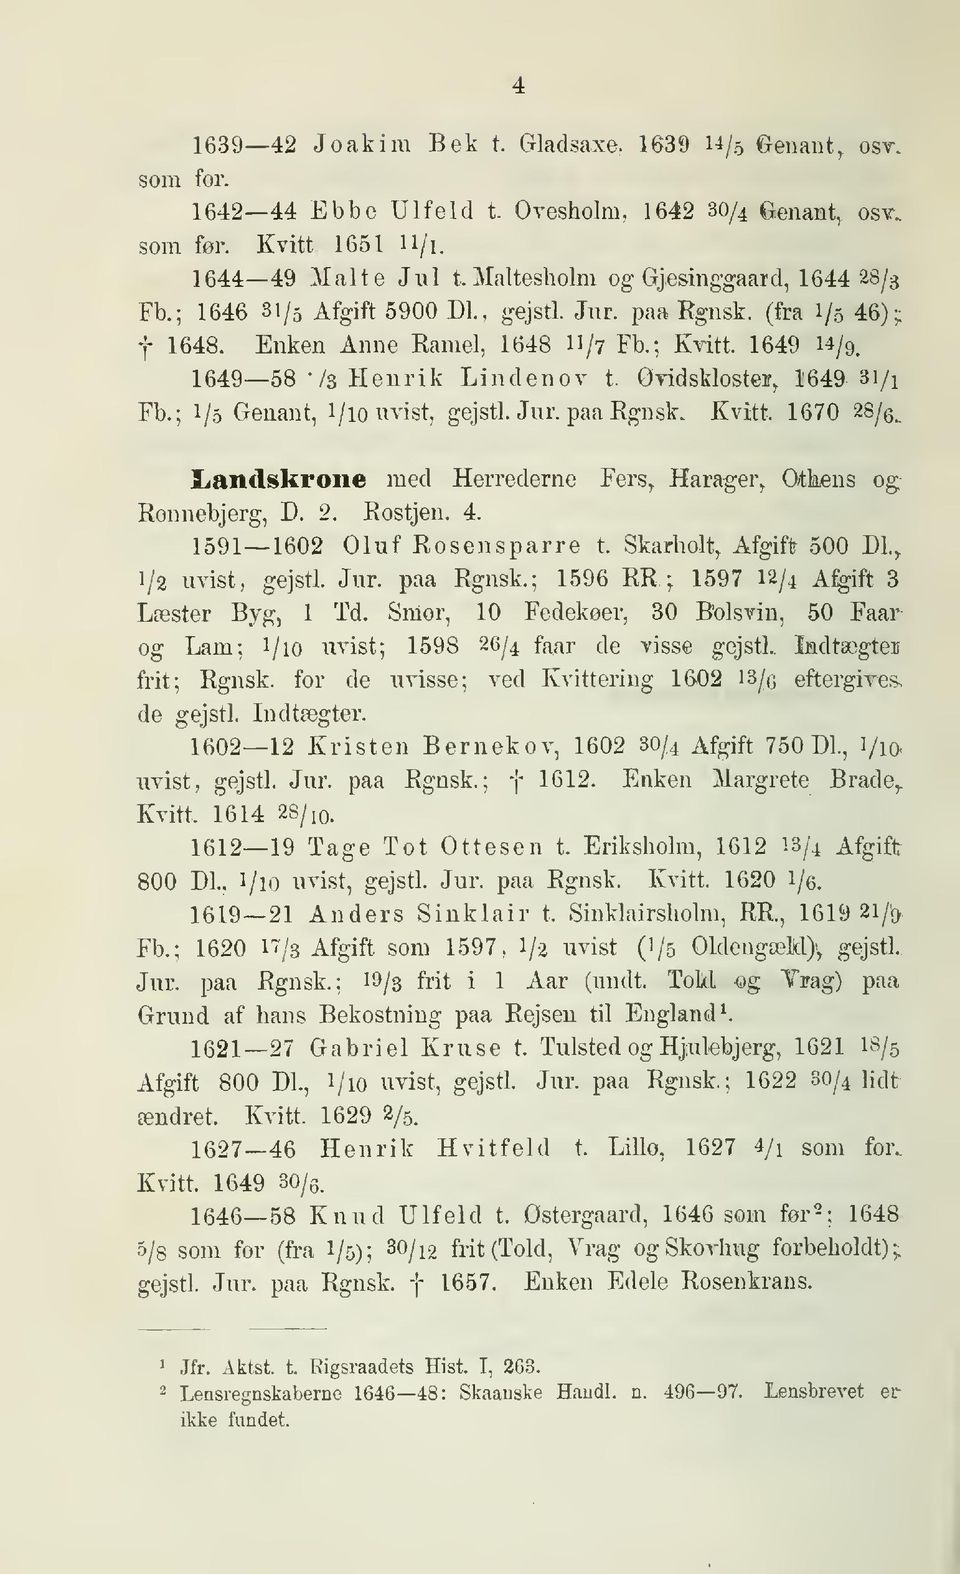 Øridskloster, 1649 3i/i Fb.; 1/5 Genant, 1/ 10 uvist, gejstl. Jur. paa Rgnsk Kvitt. 1670 28/6.. liandskrone med Herrederne Fers^ Harager^ Otkens og Rønnebjerg, D. 2. Rostjen. 4.